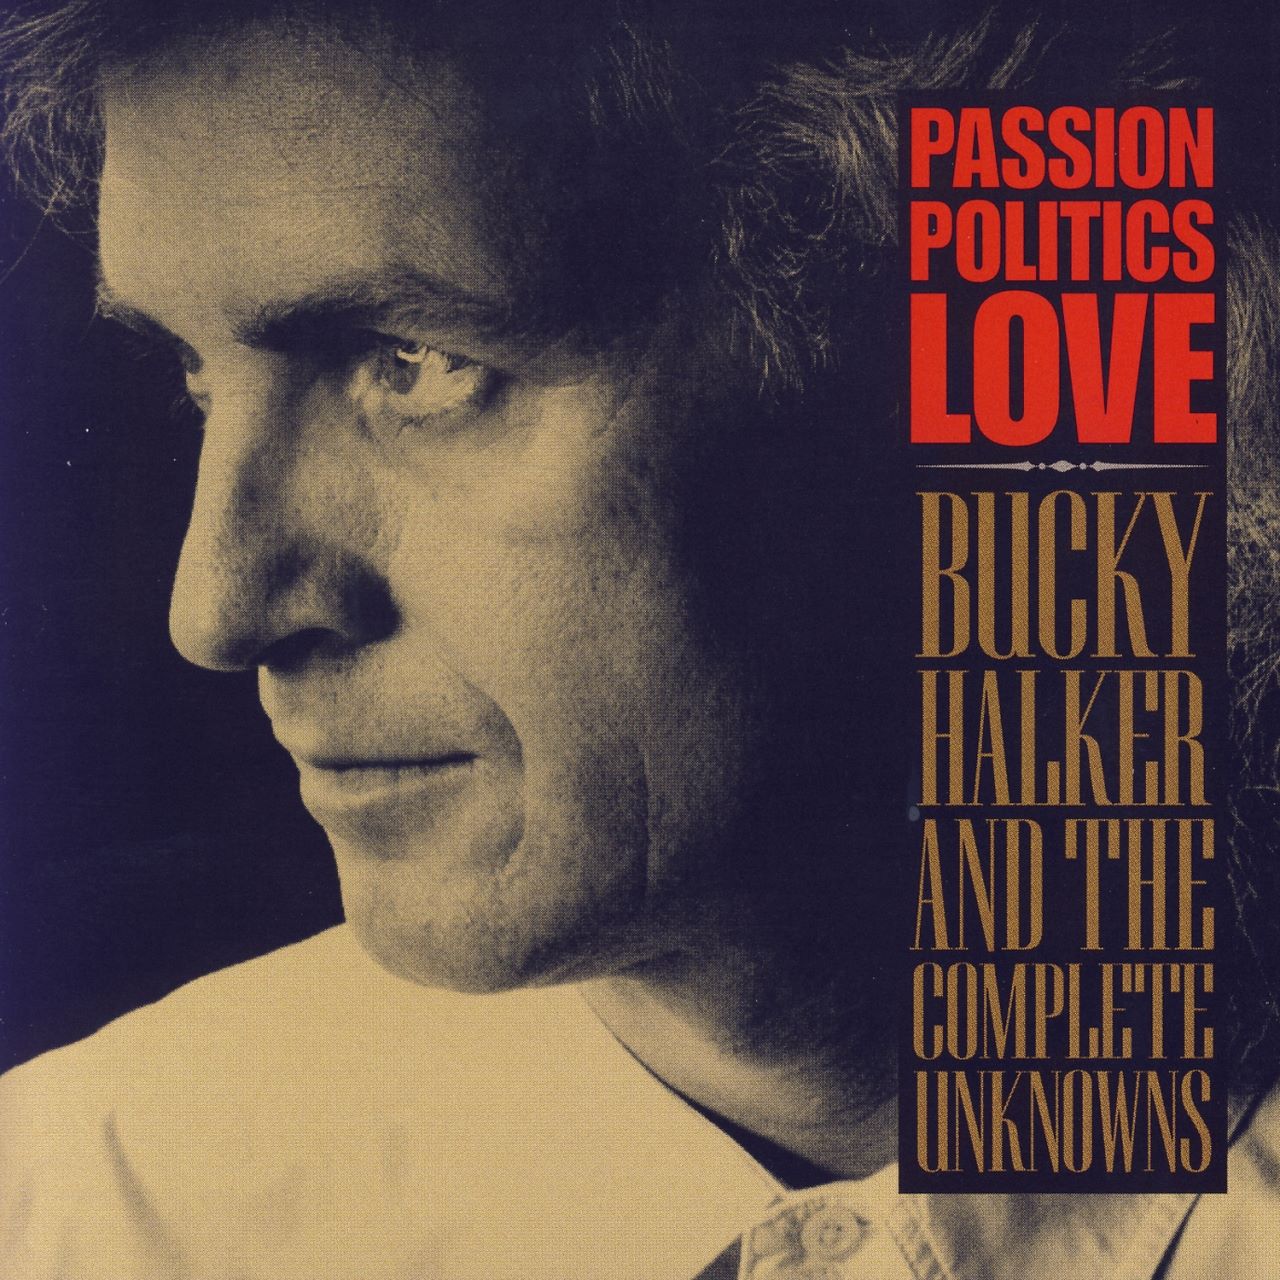 Bucky Halker & The Complete Unknowns - Passion Politics Love cover album